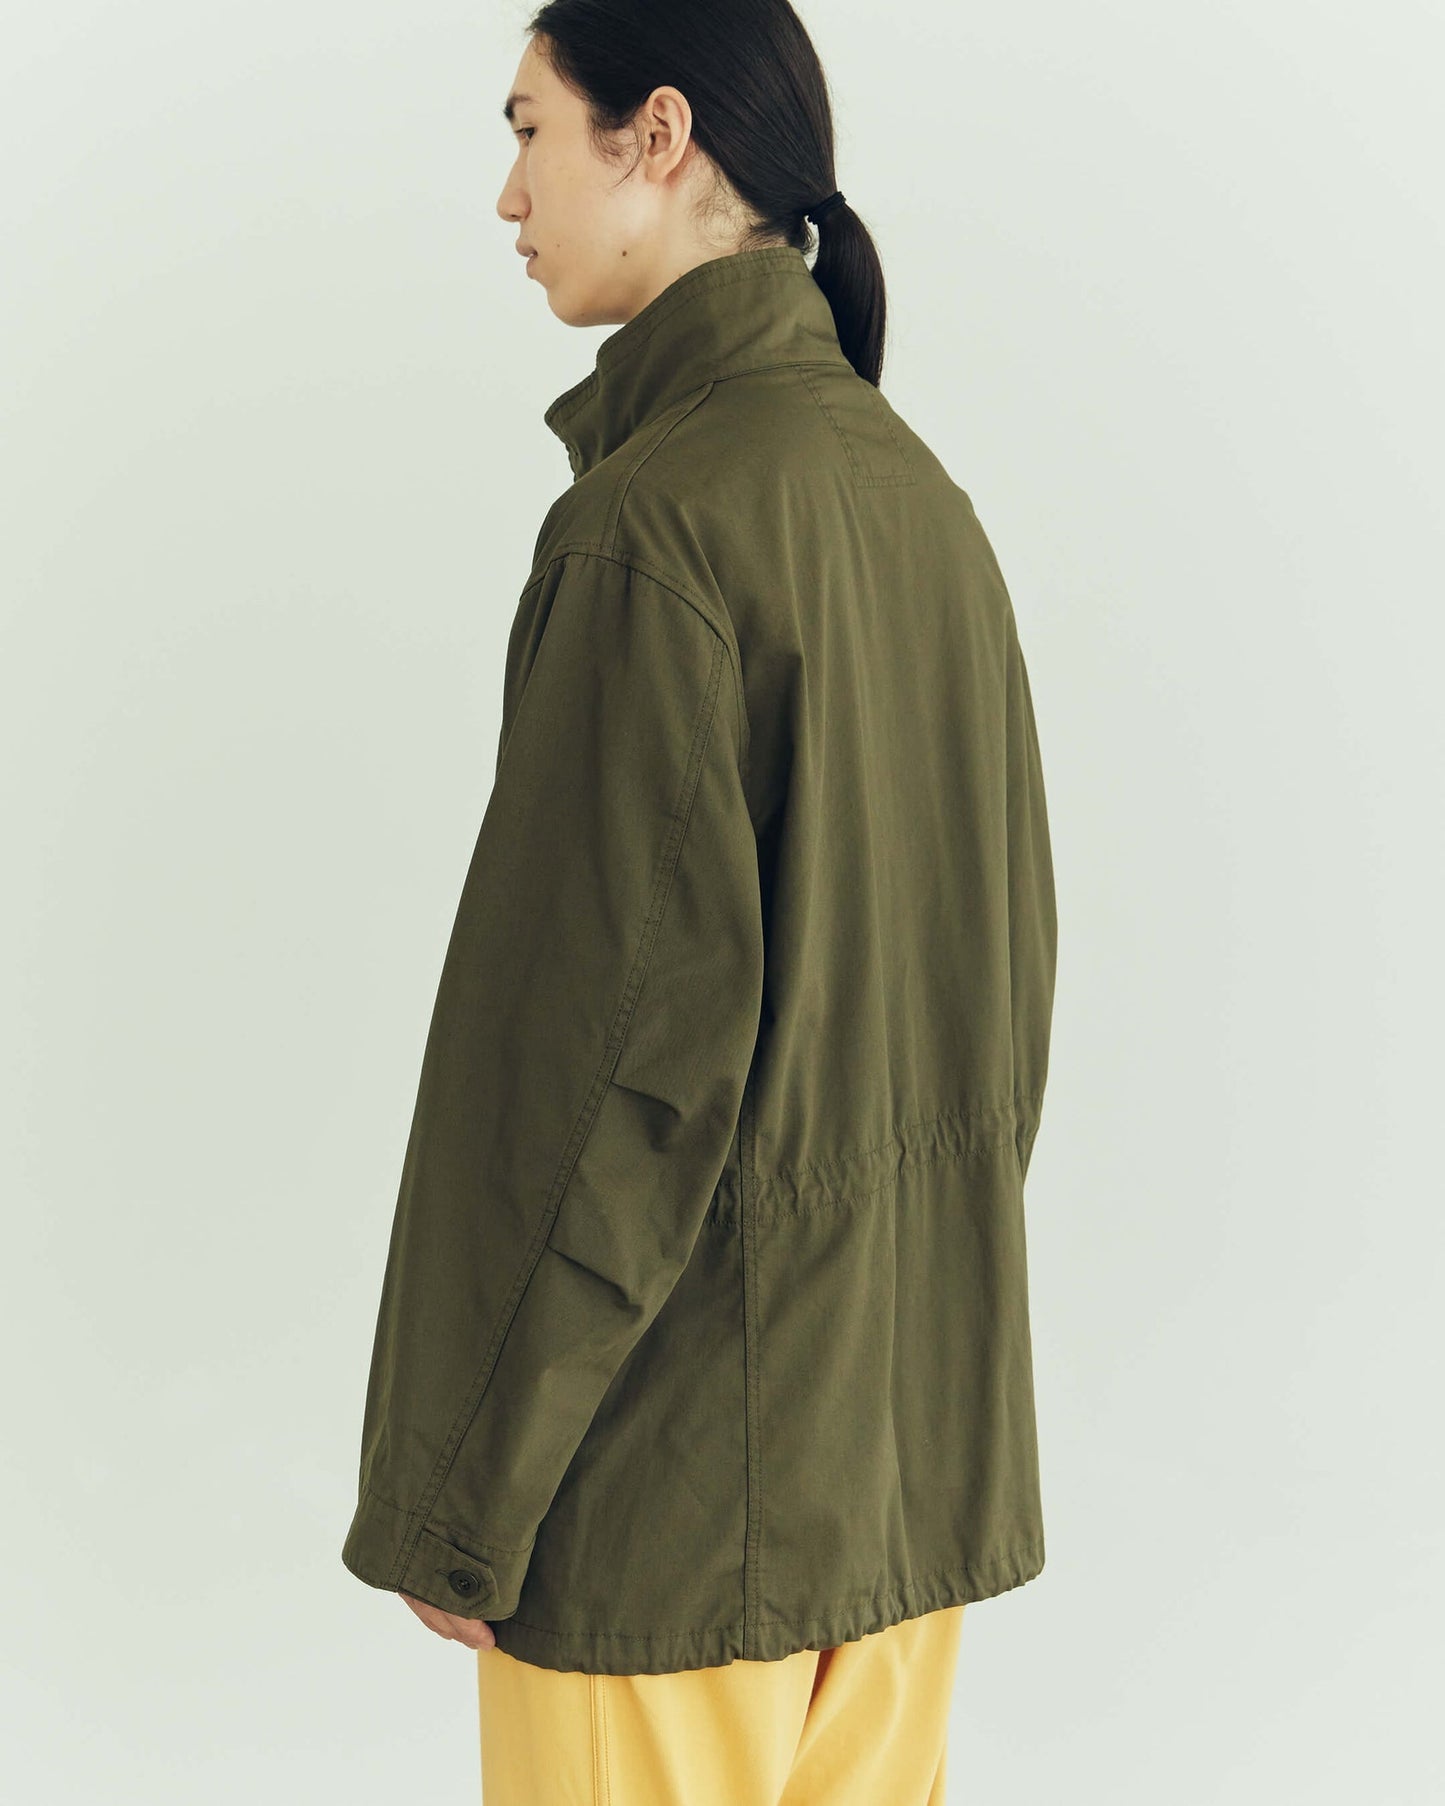 Army Twill - Field Jacket - Khaki